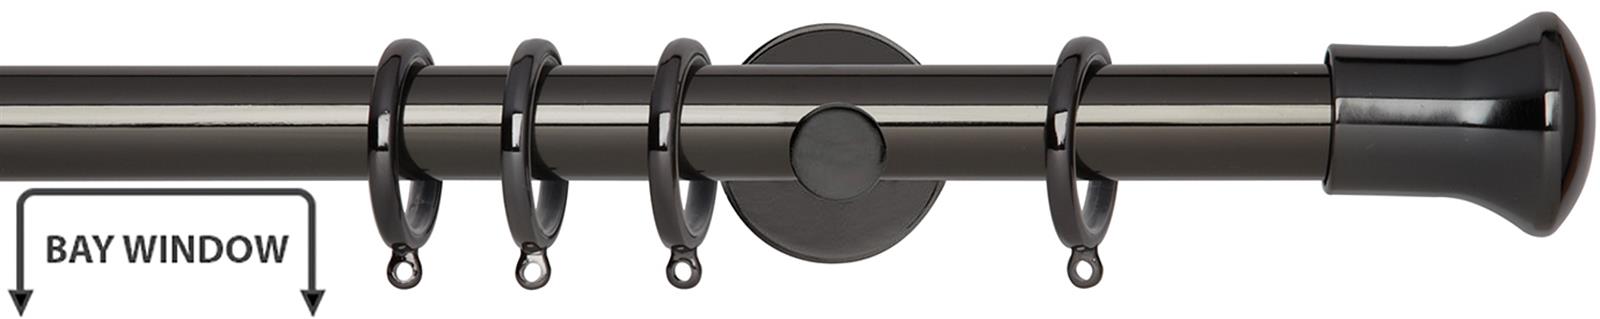 Neo 28mm Bay Window Pole Black Nickel Trumpet